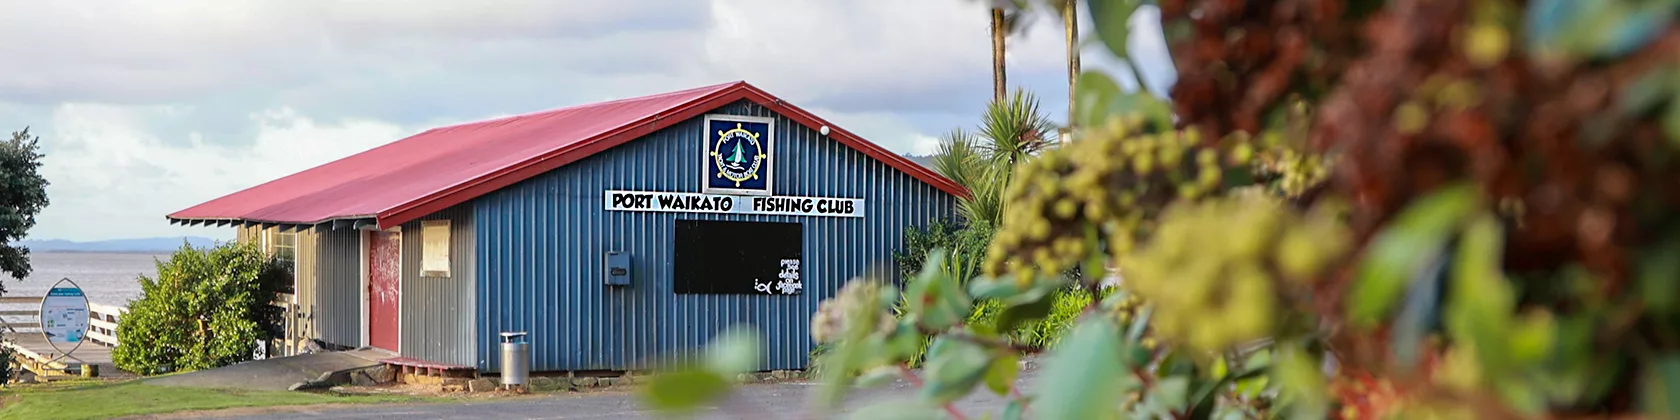 Fishing Club_Port Waikato Holiday Park_Good CX153-Edit